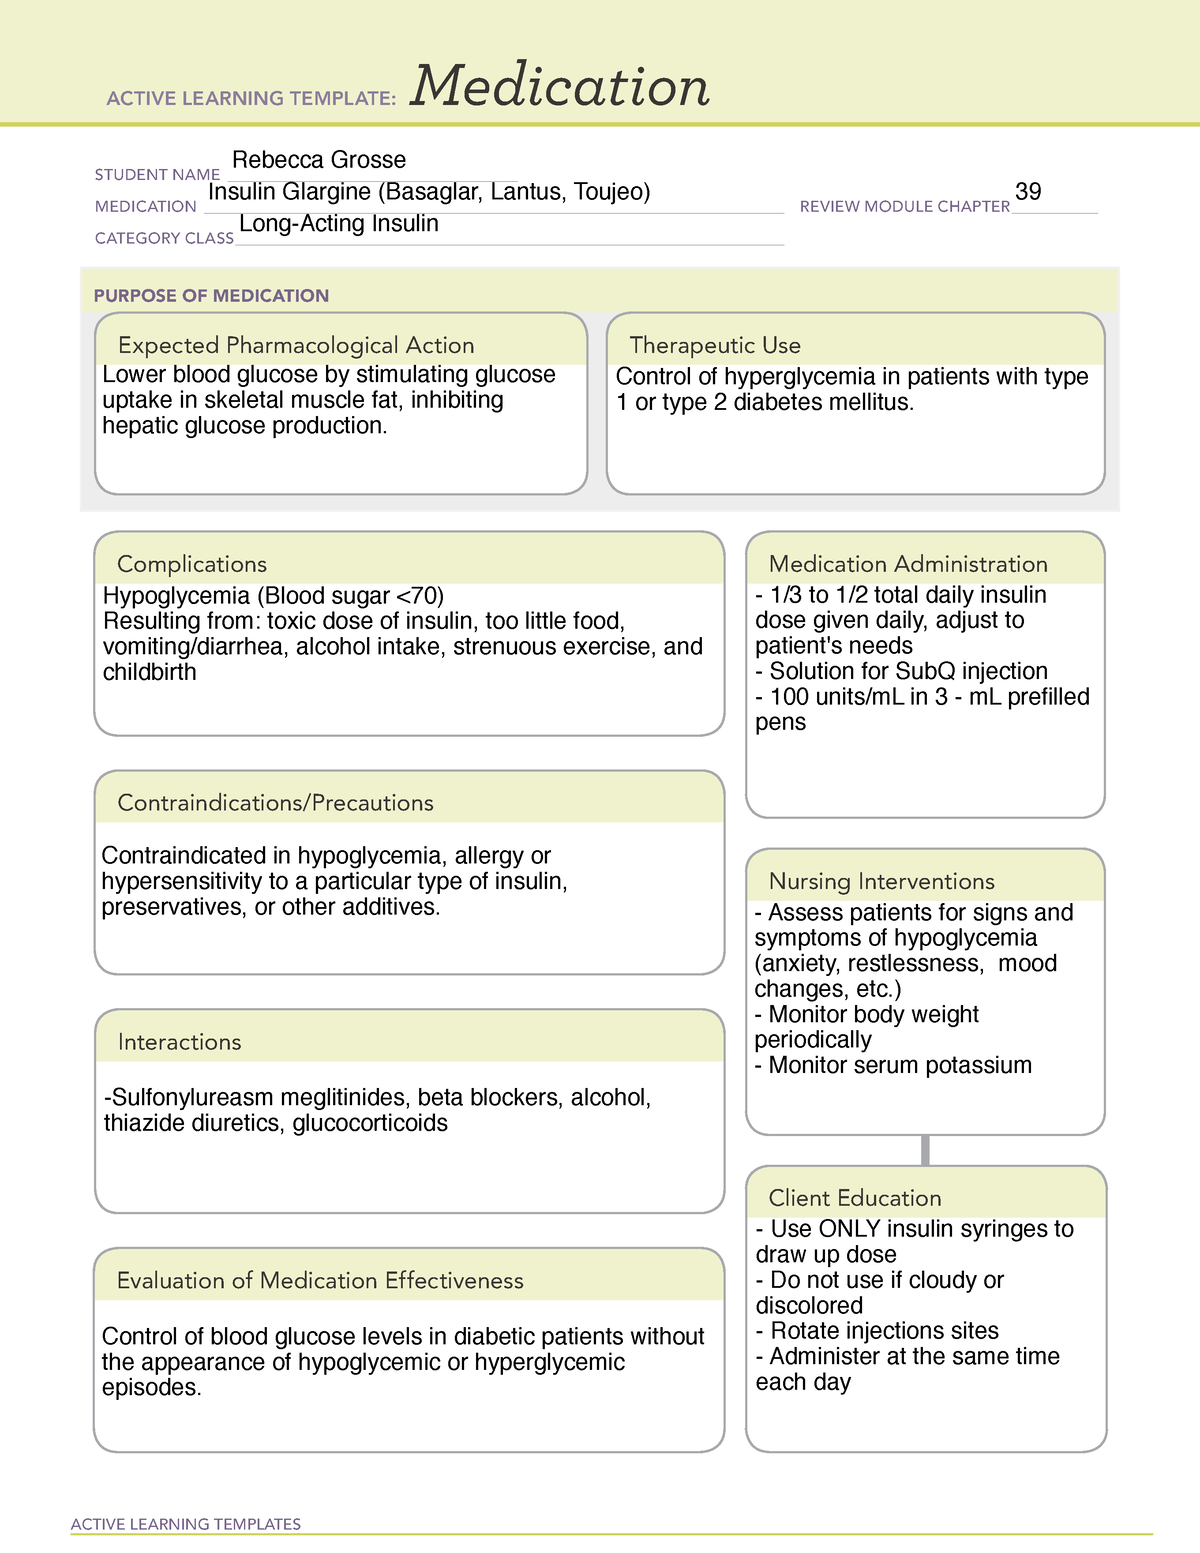 medication-glargine-active-learning-templates-medication-student